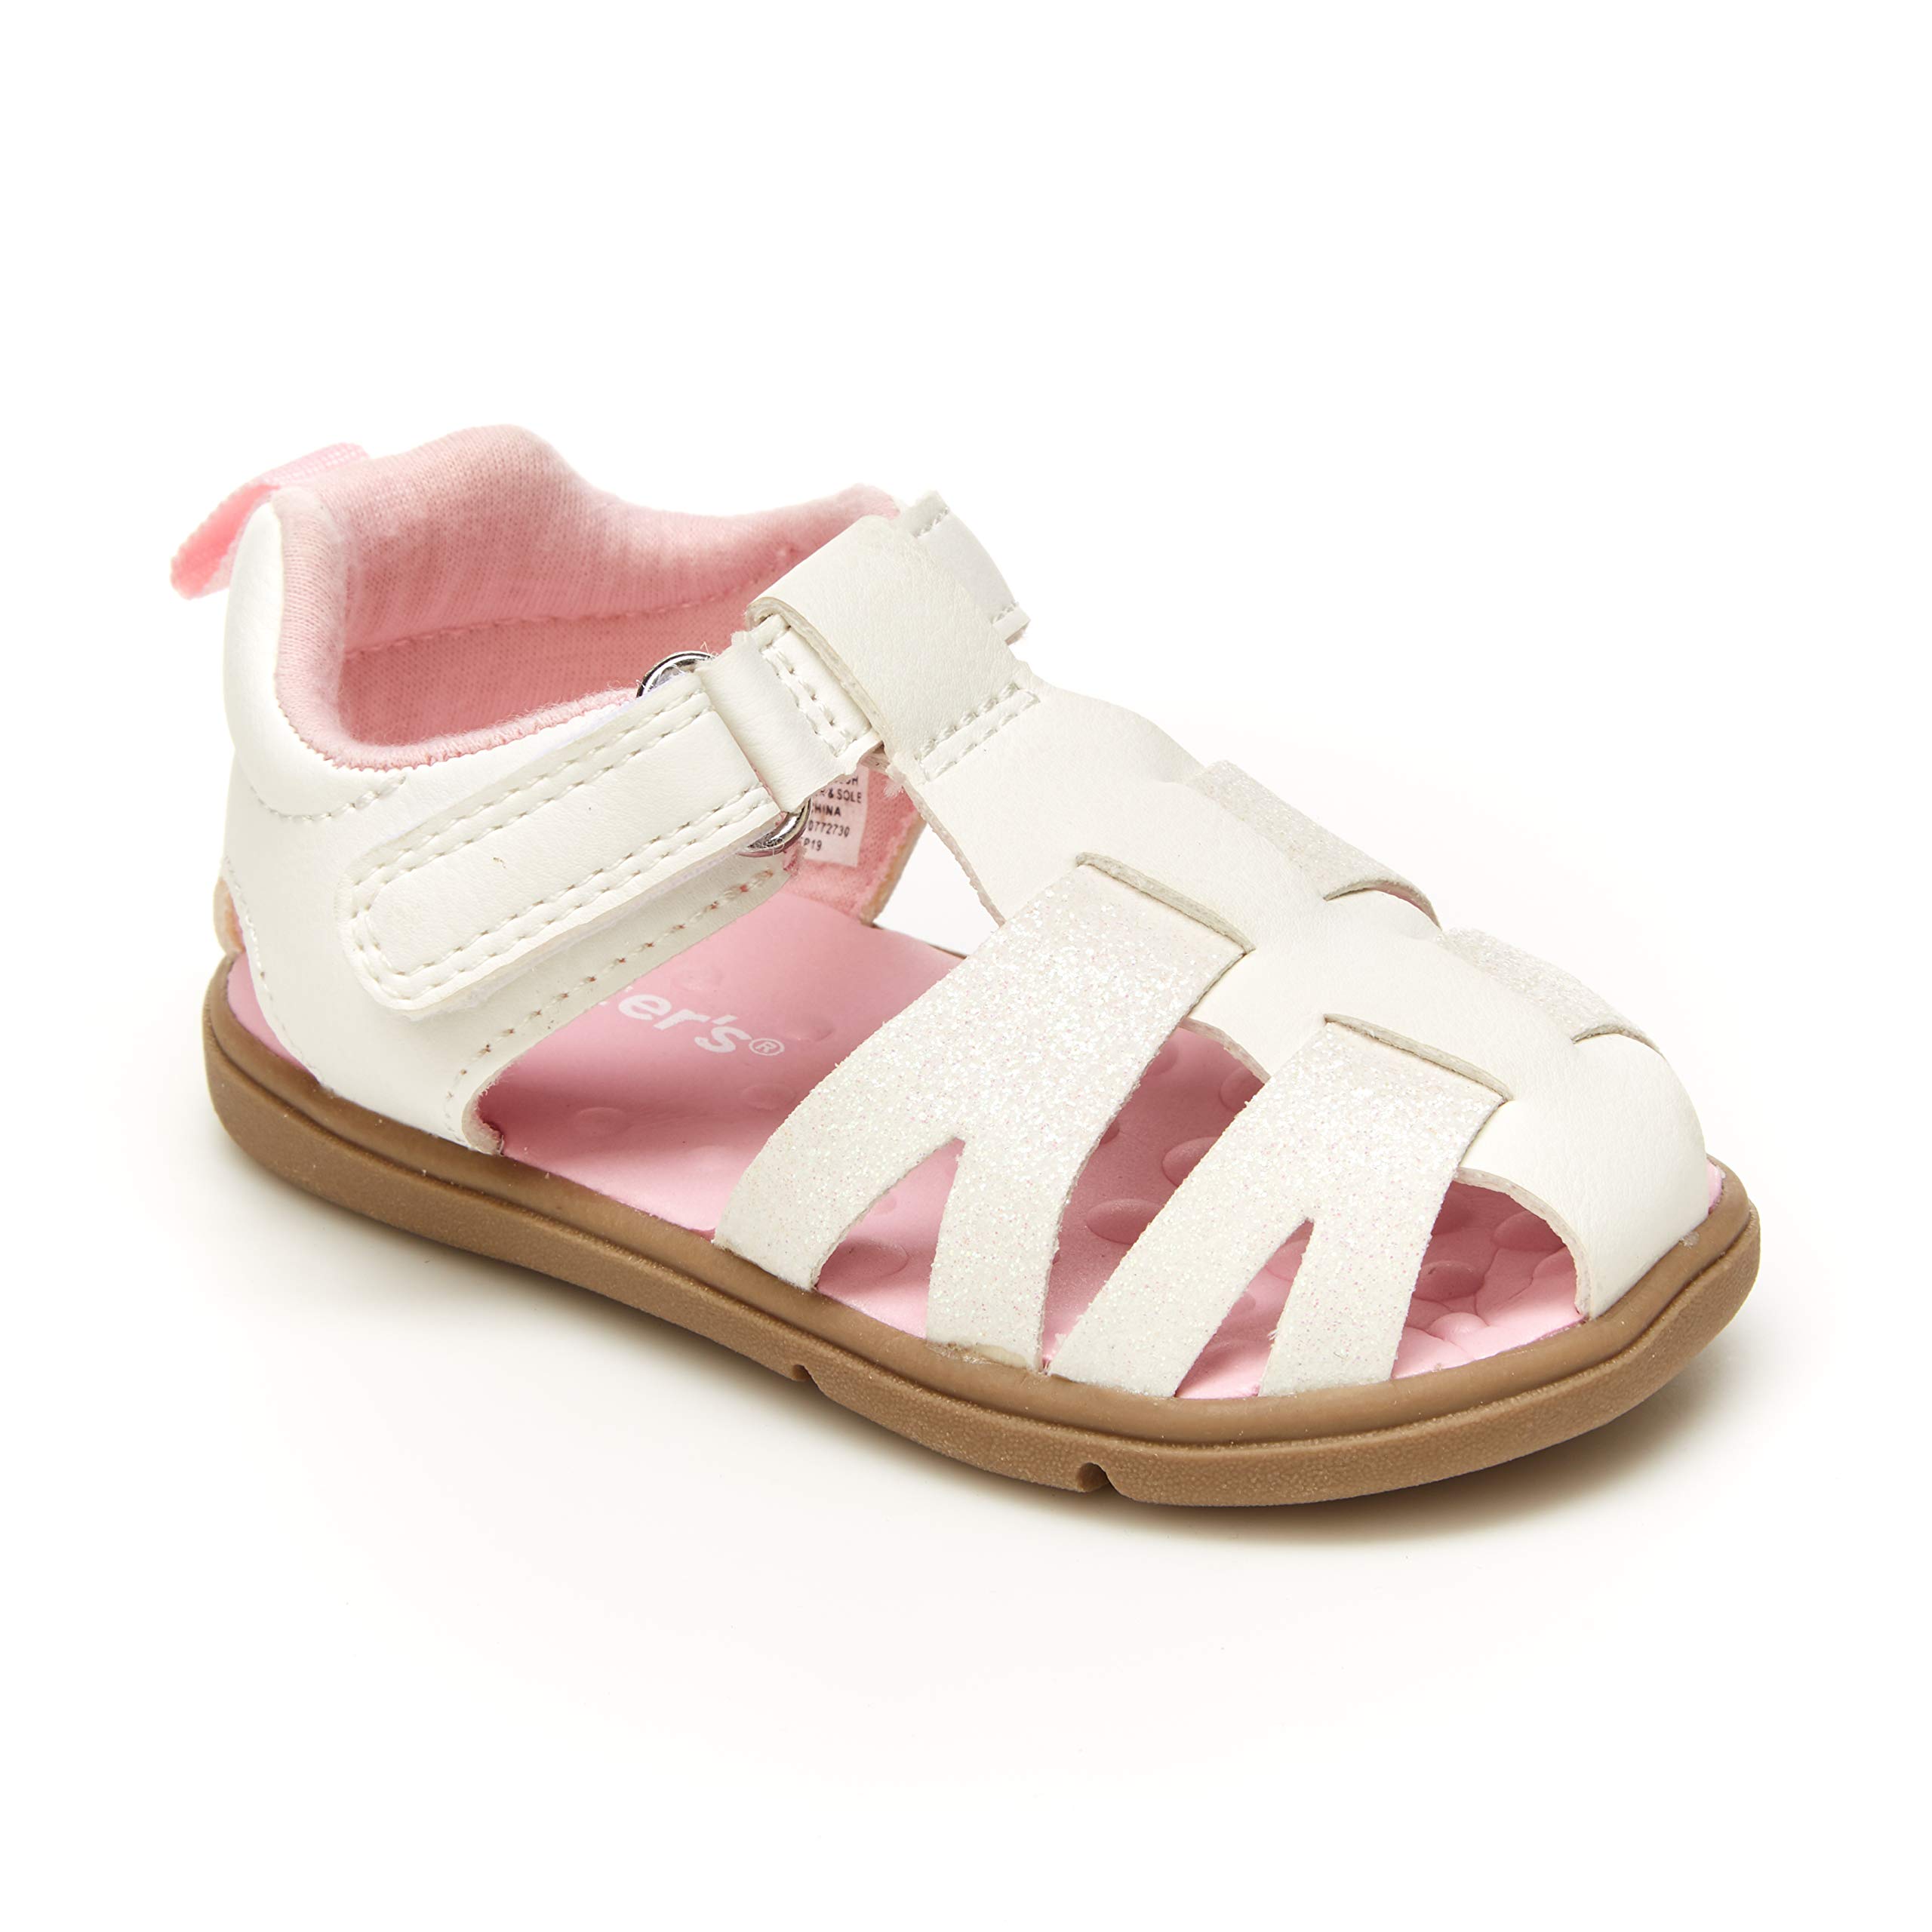 Carter's Unisex-Child Adalyn First Walker Shoe